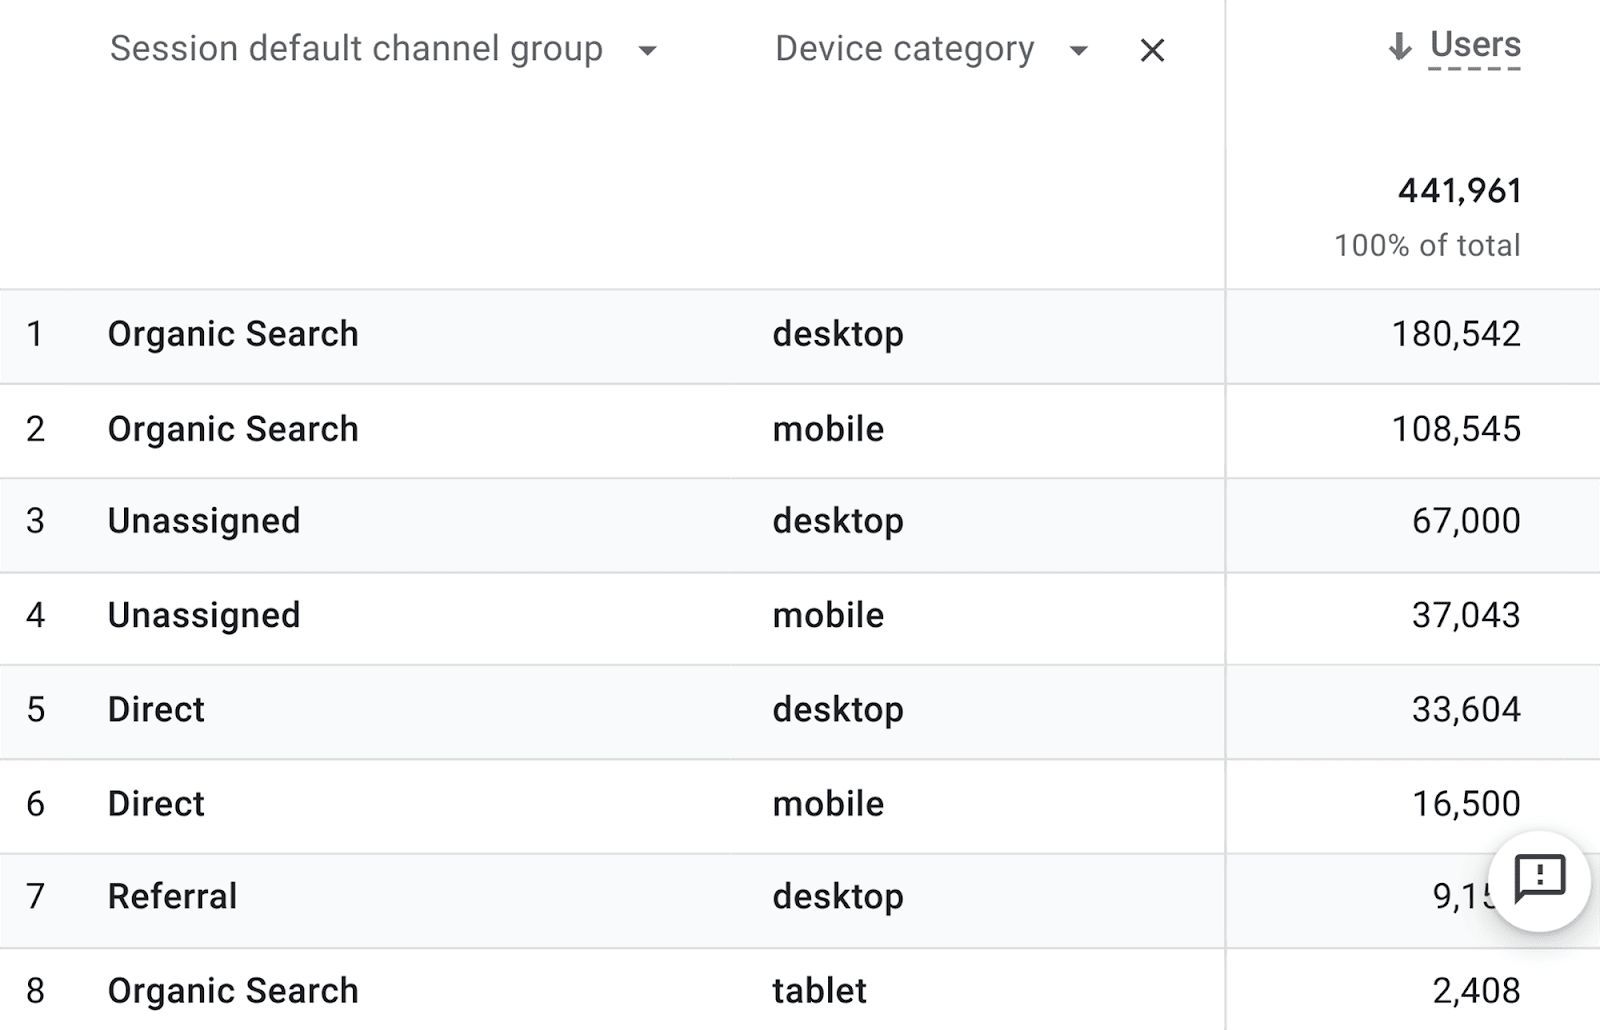 Device category column